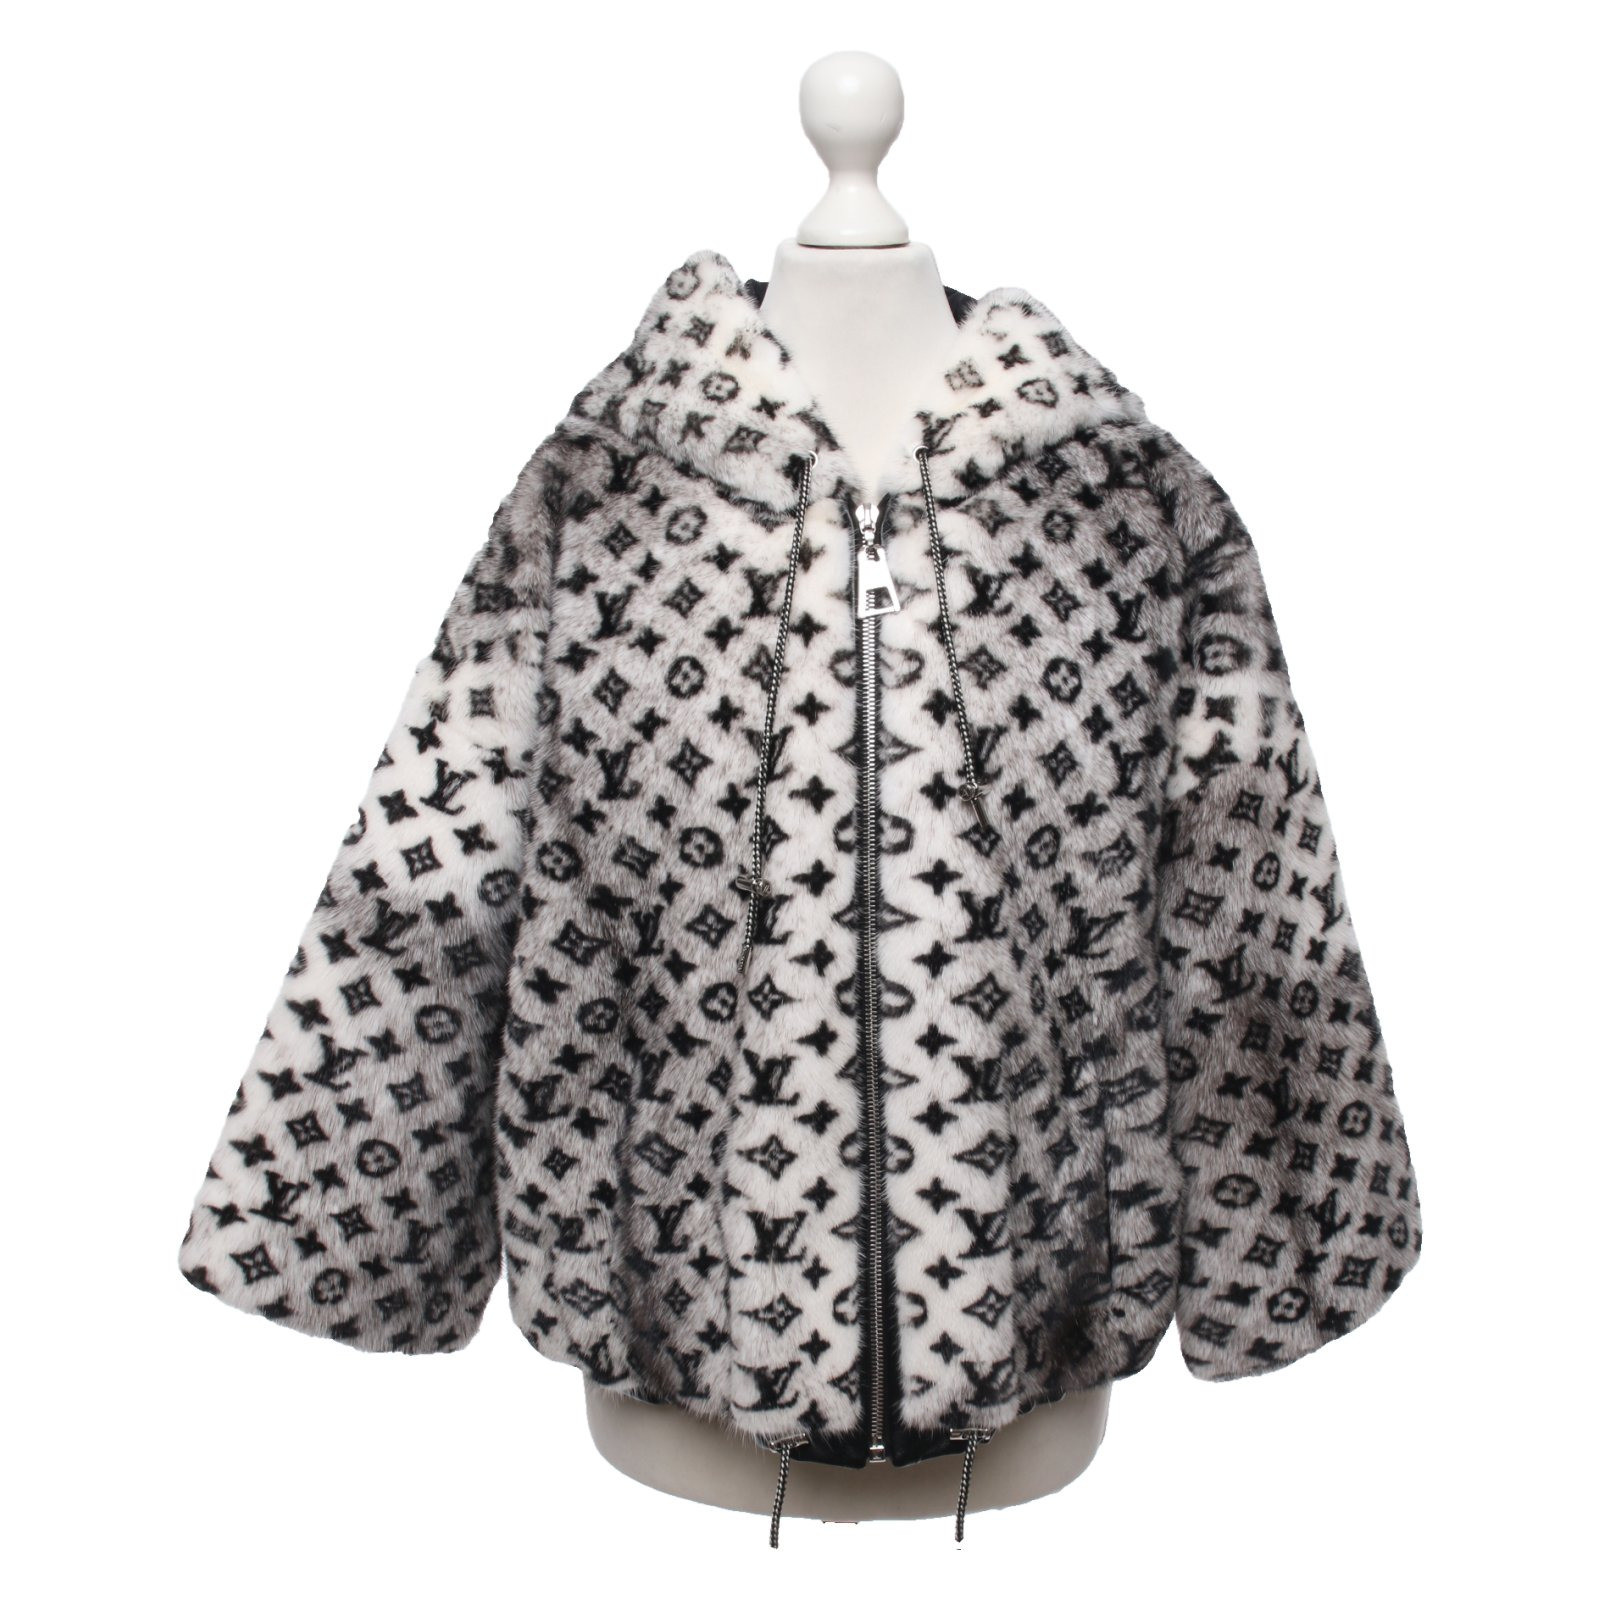 LOUIS VUITTON Women's Jacke/Mantel aus Pelz Size: FR 38